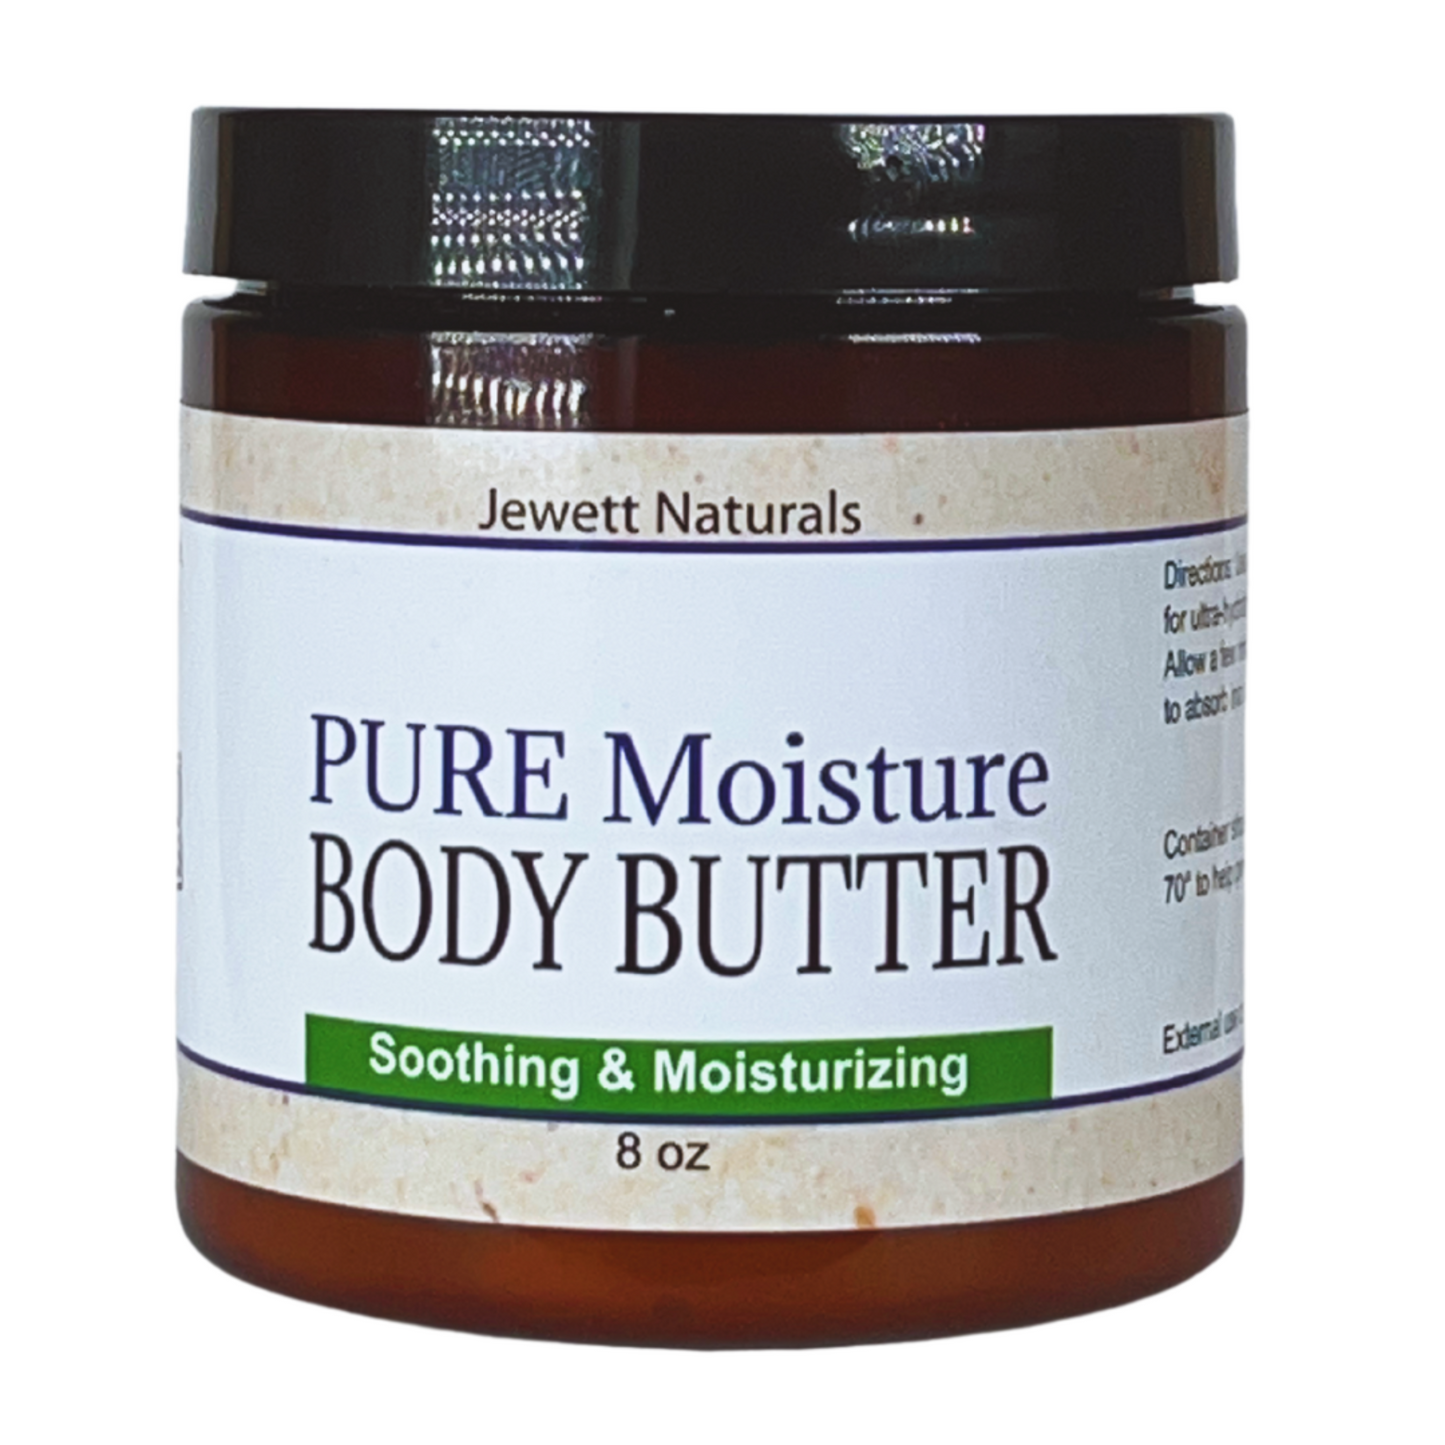 Pure Moisture (Body Butter)